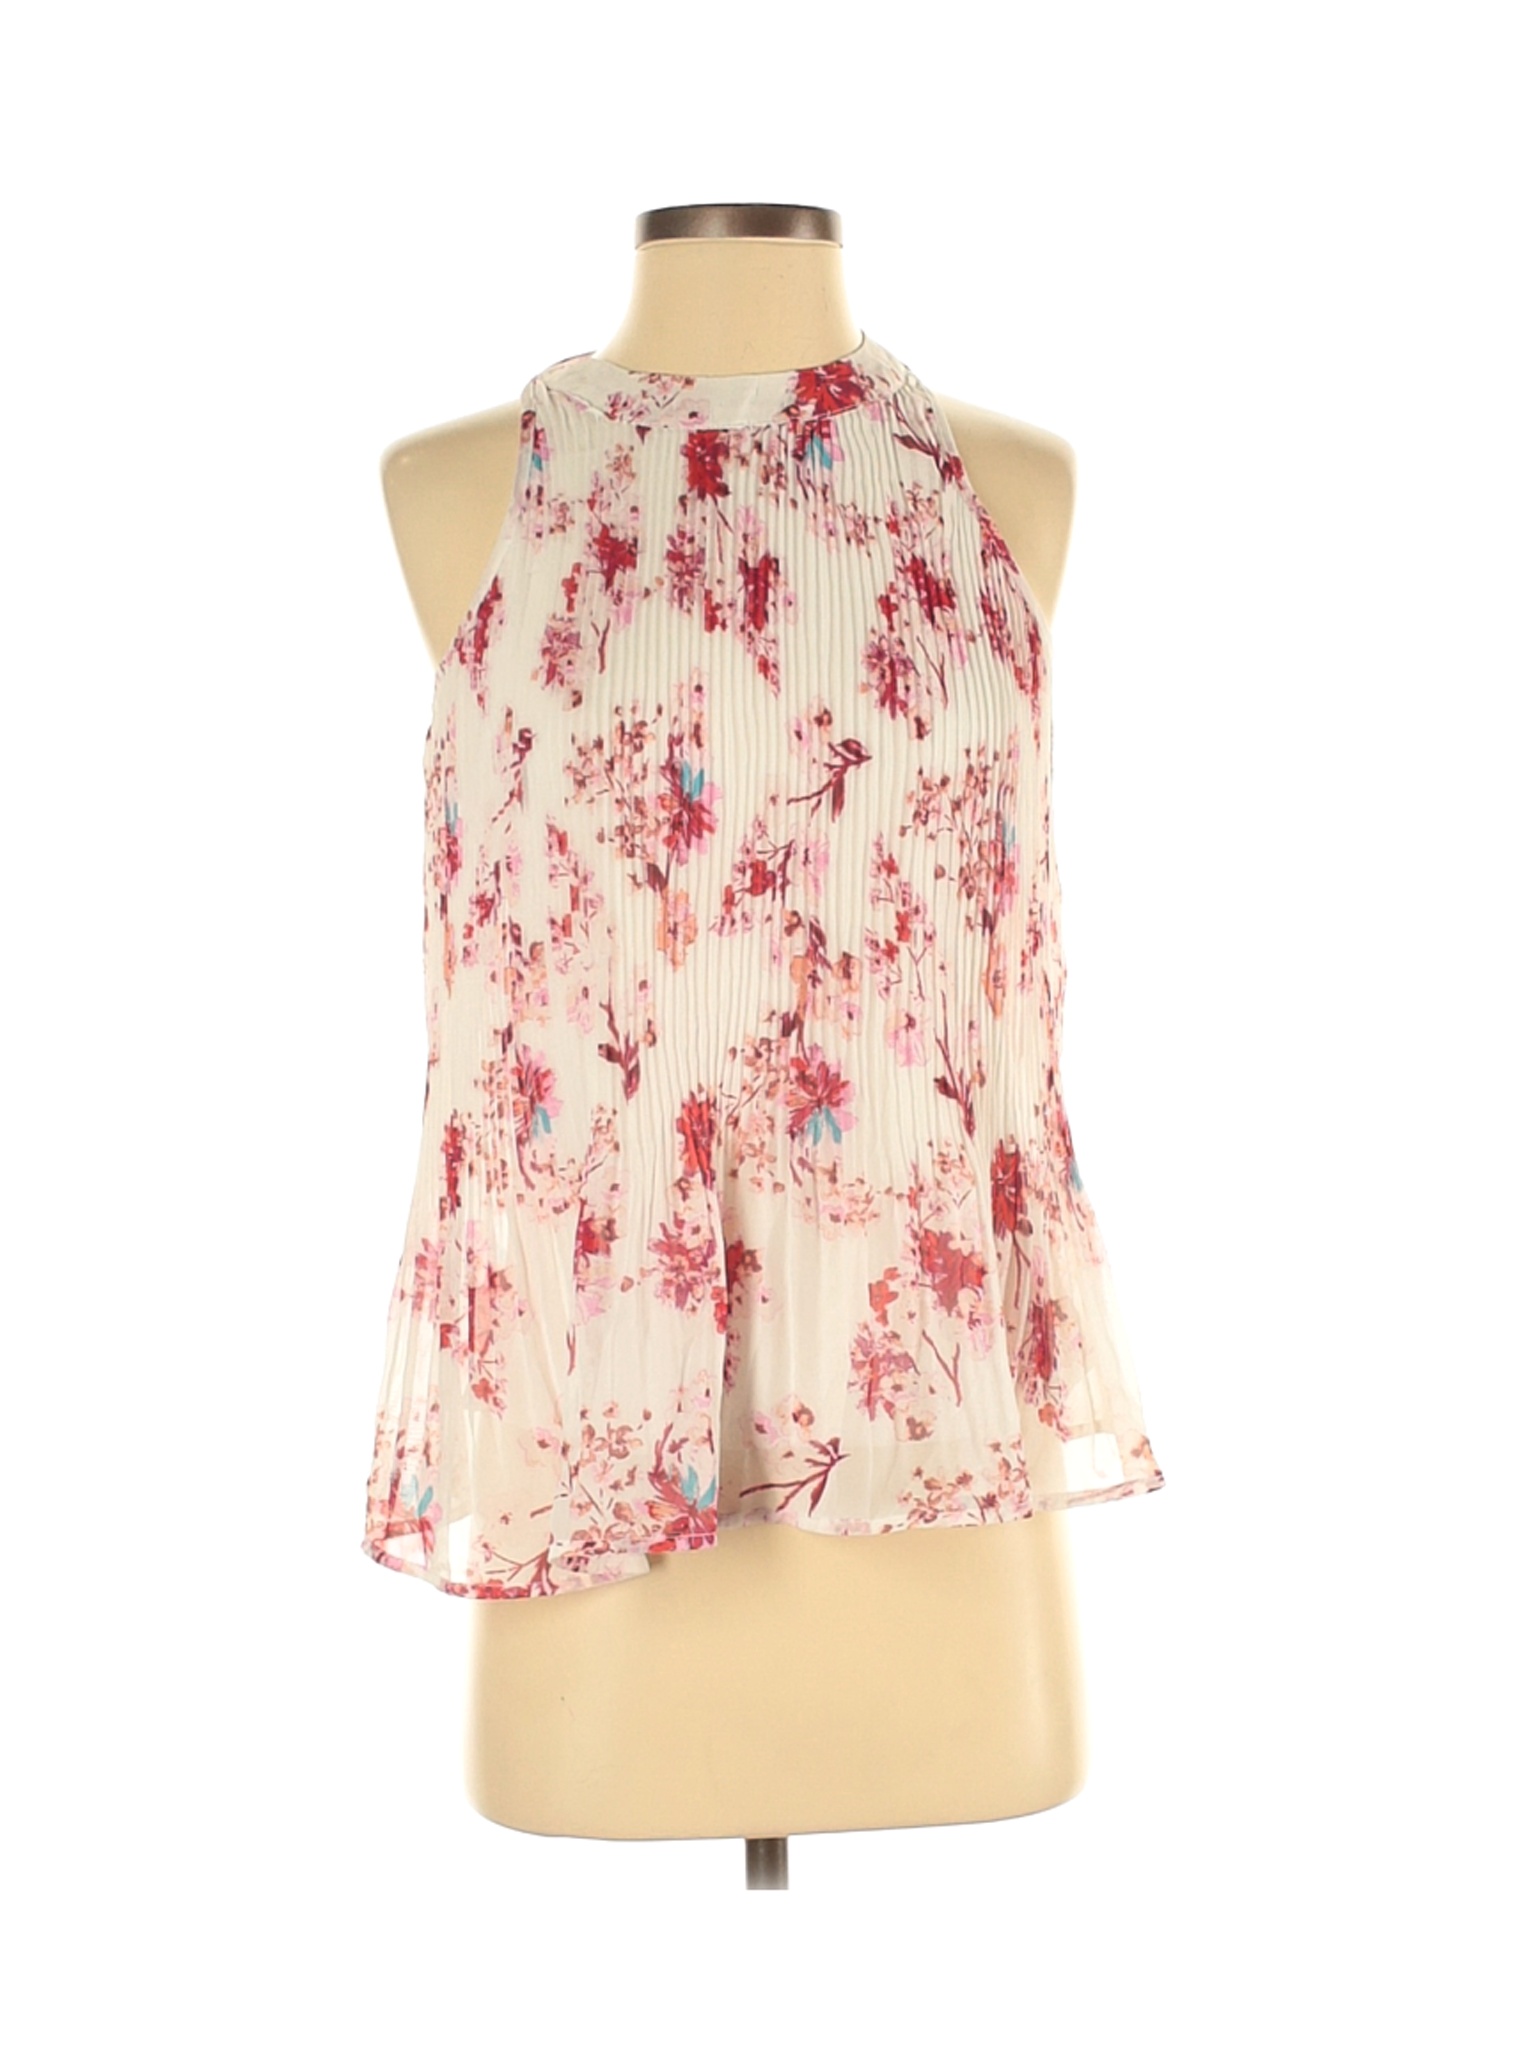 Pink Rose Women Ivory Sleeveless Blouse S | eBay